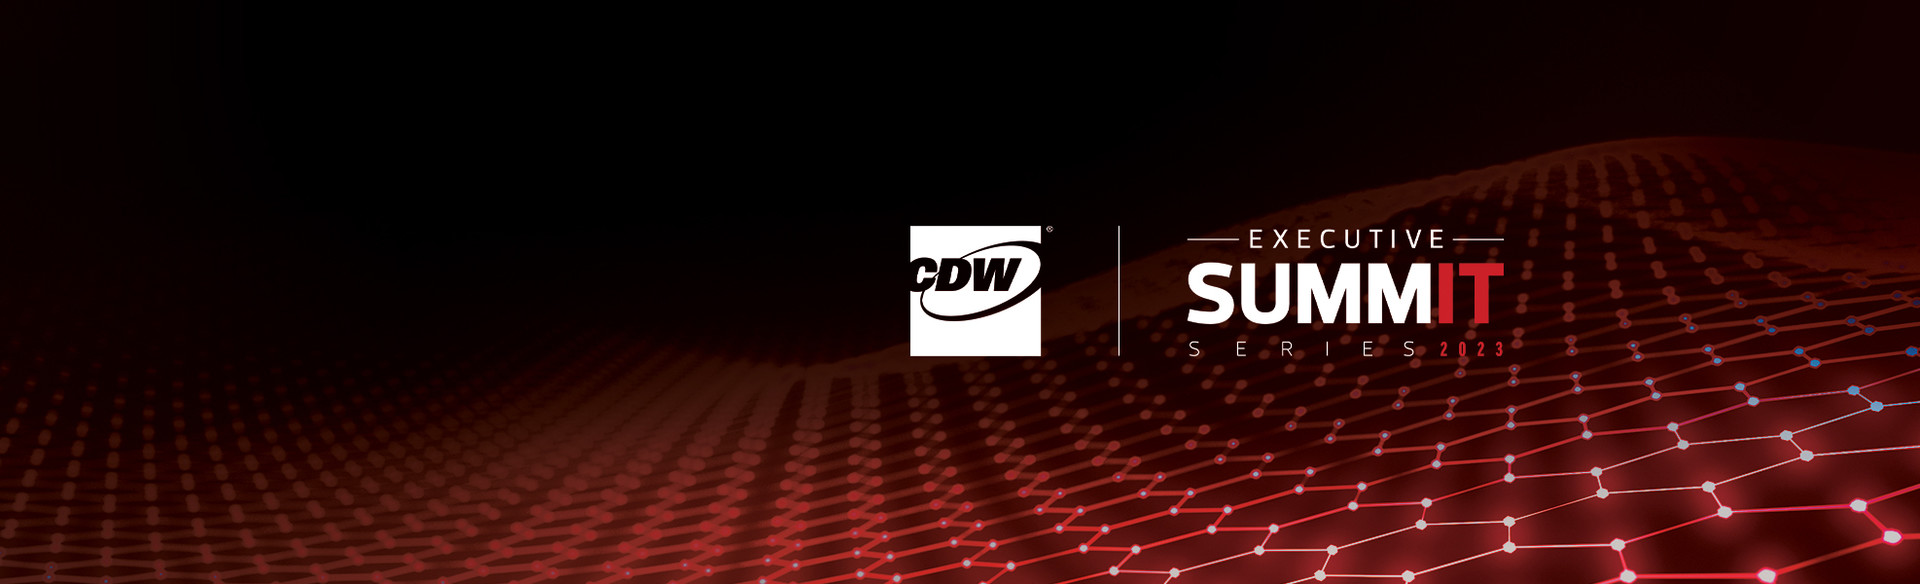 CDW Executive SummIT Series 2023